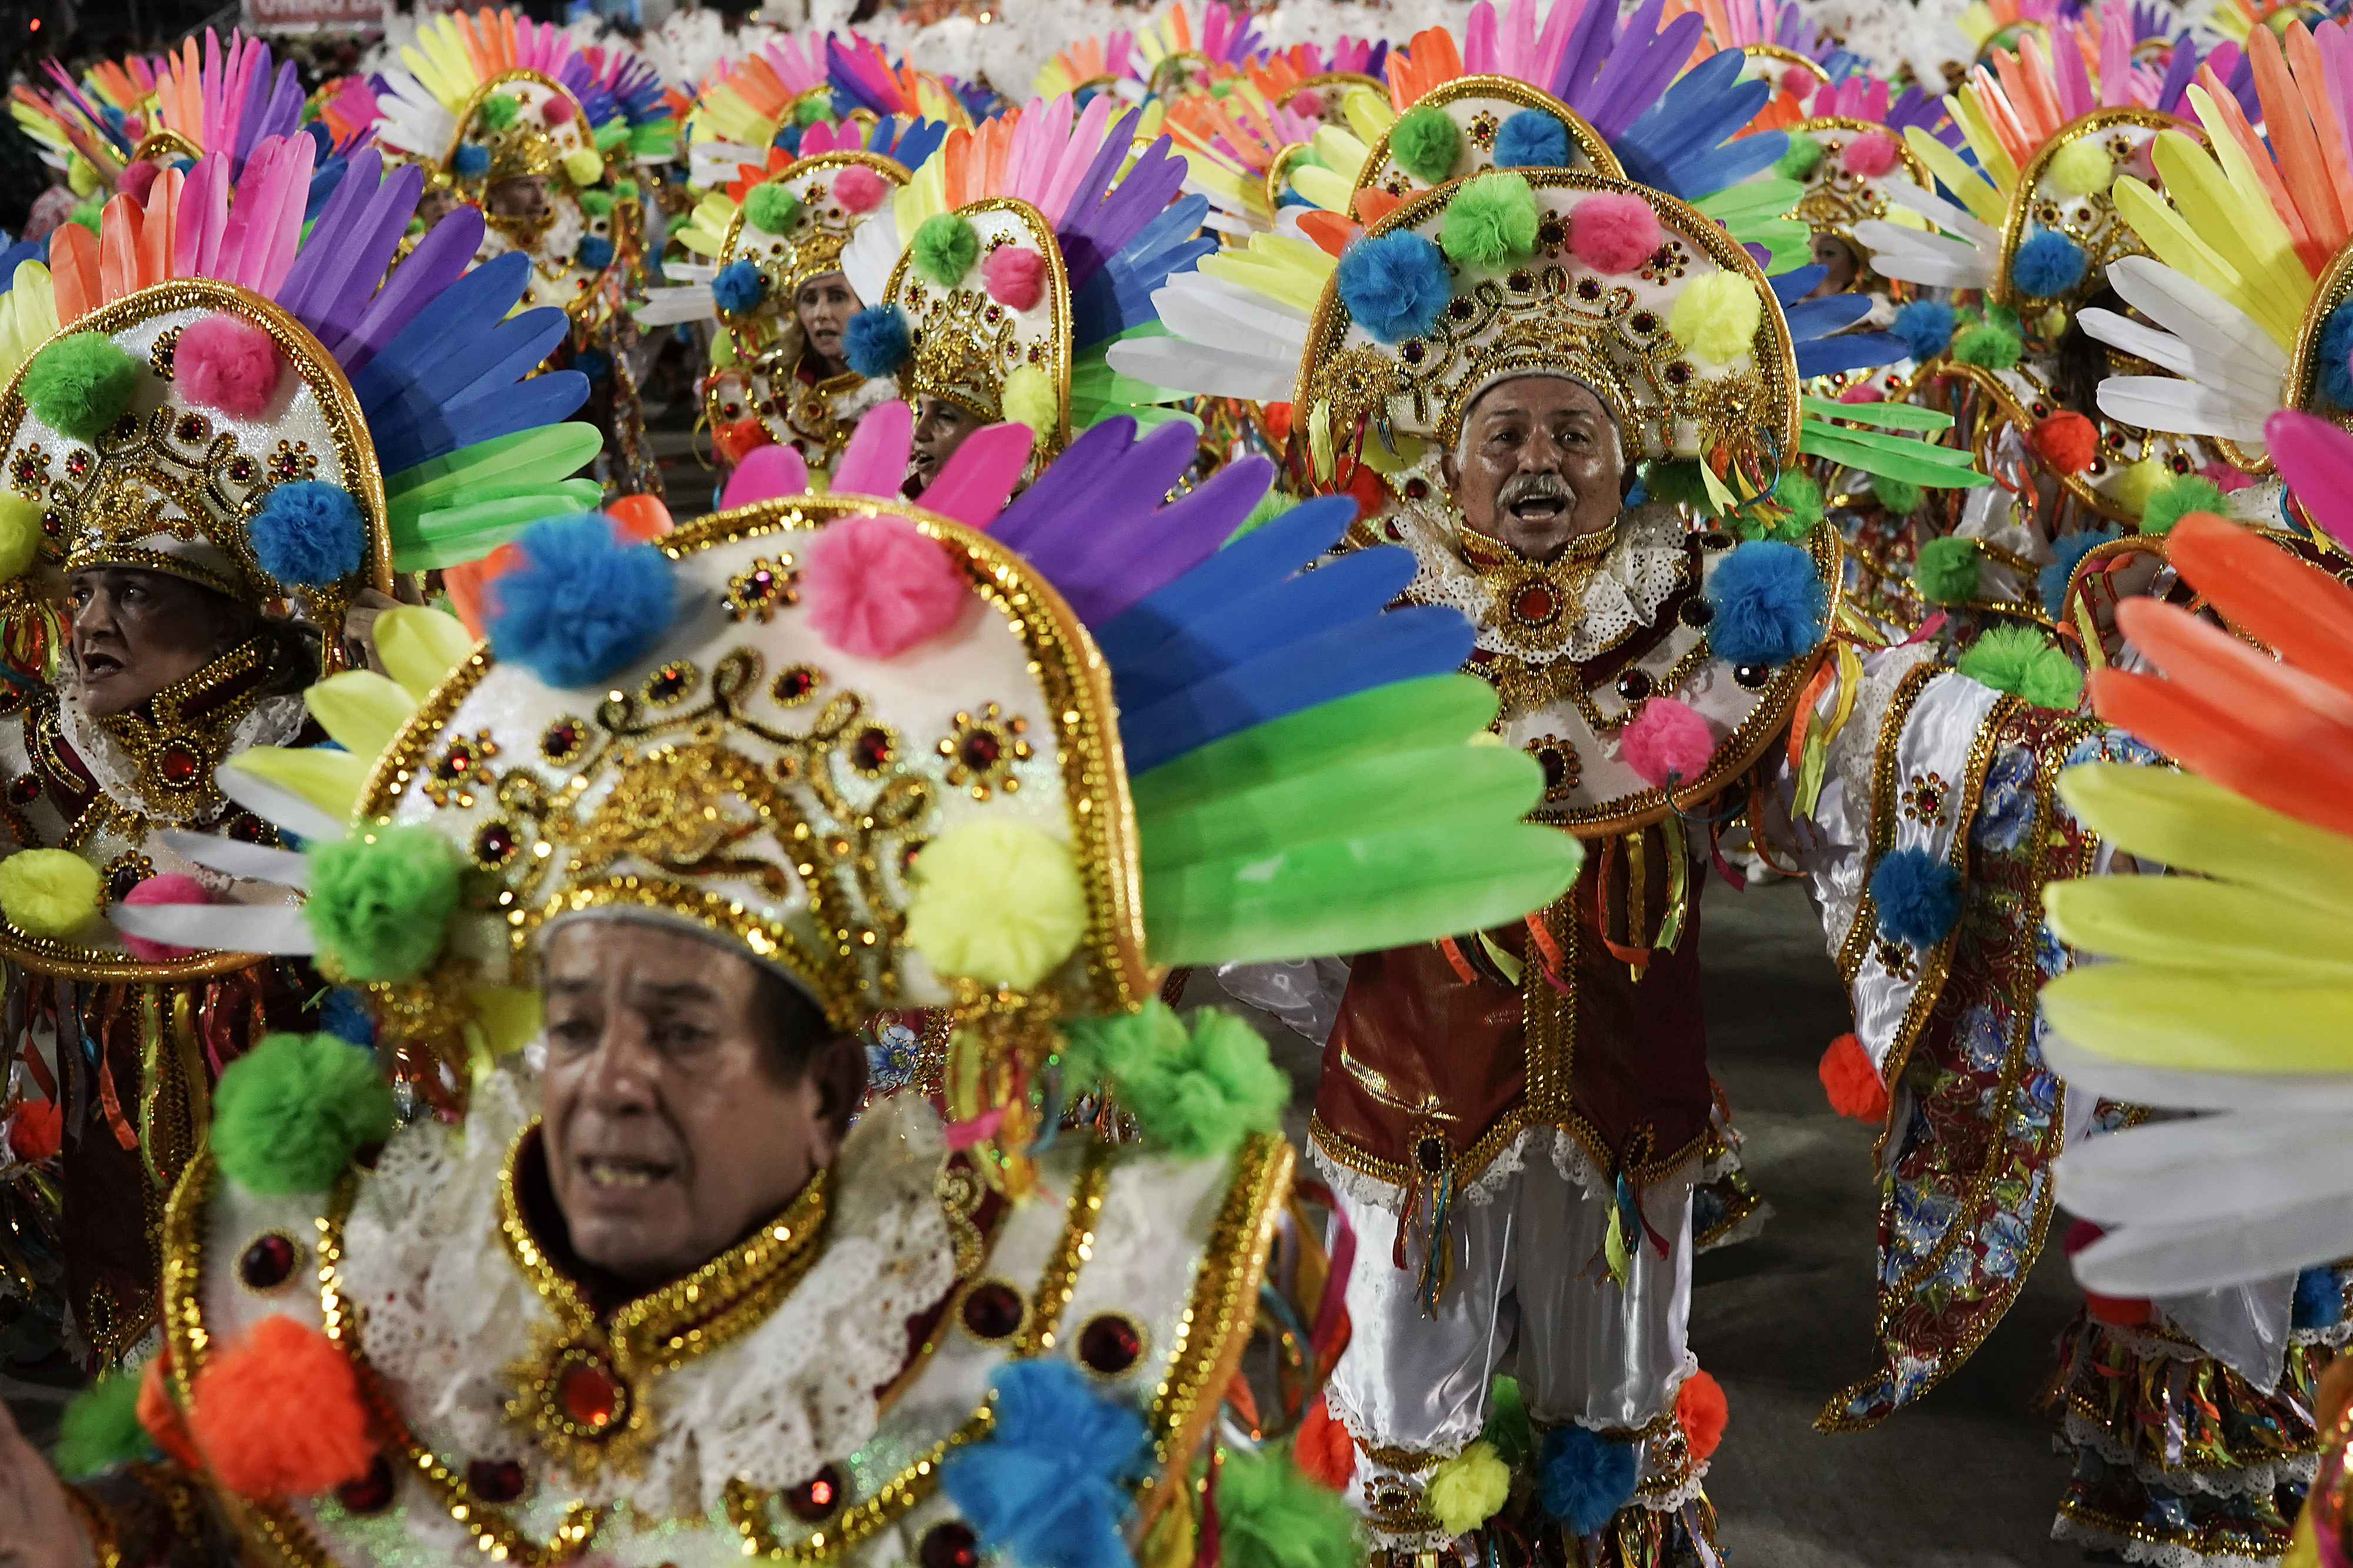 Performers from the Uniao da Ilha samba school parade during Carnival celebrations at the Sambadrome in Rio de Janeiro, Brazil, Tuesday, March 5, 2019. (AP Photo/Leo Correa)